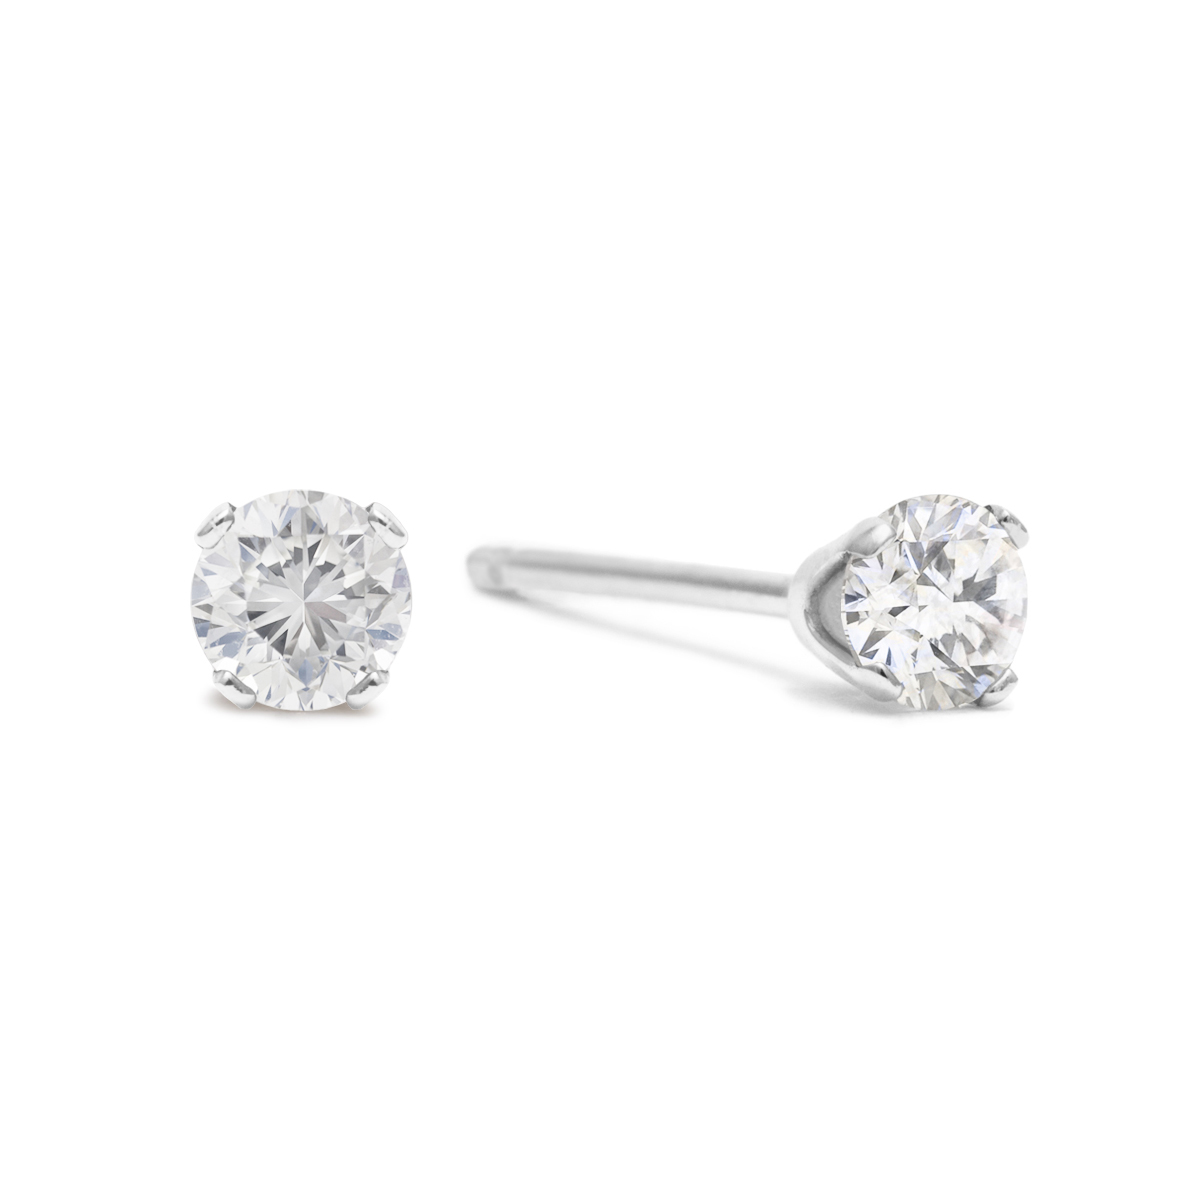 5 POINT TINY Diamond Stud Earrings in 